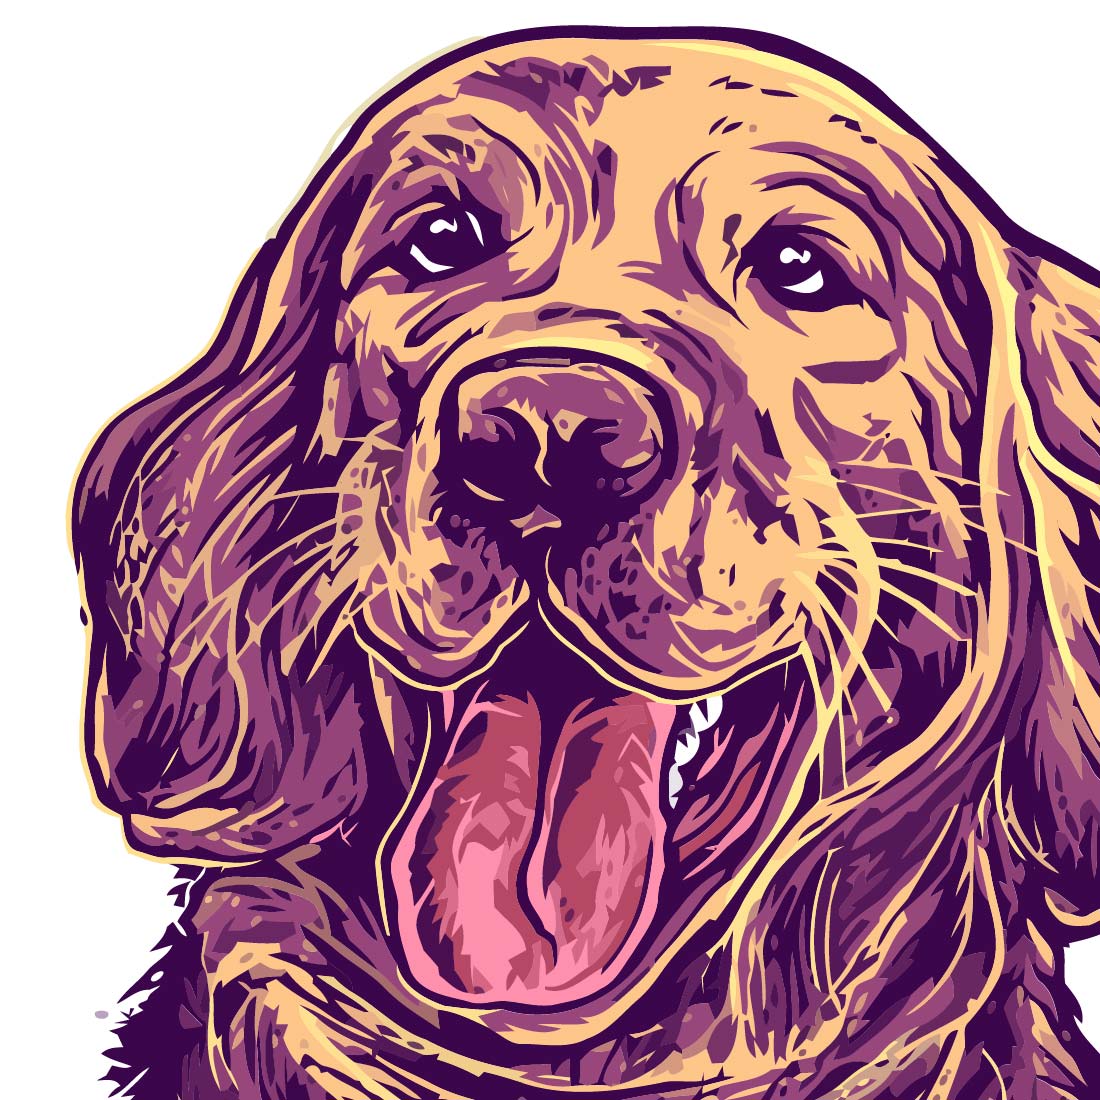 Dog cocker spaniel puppy illustration preview image.